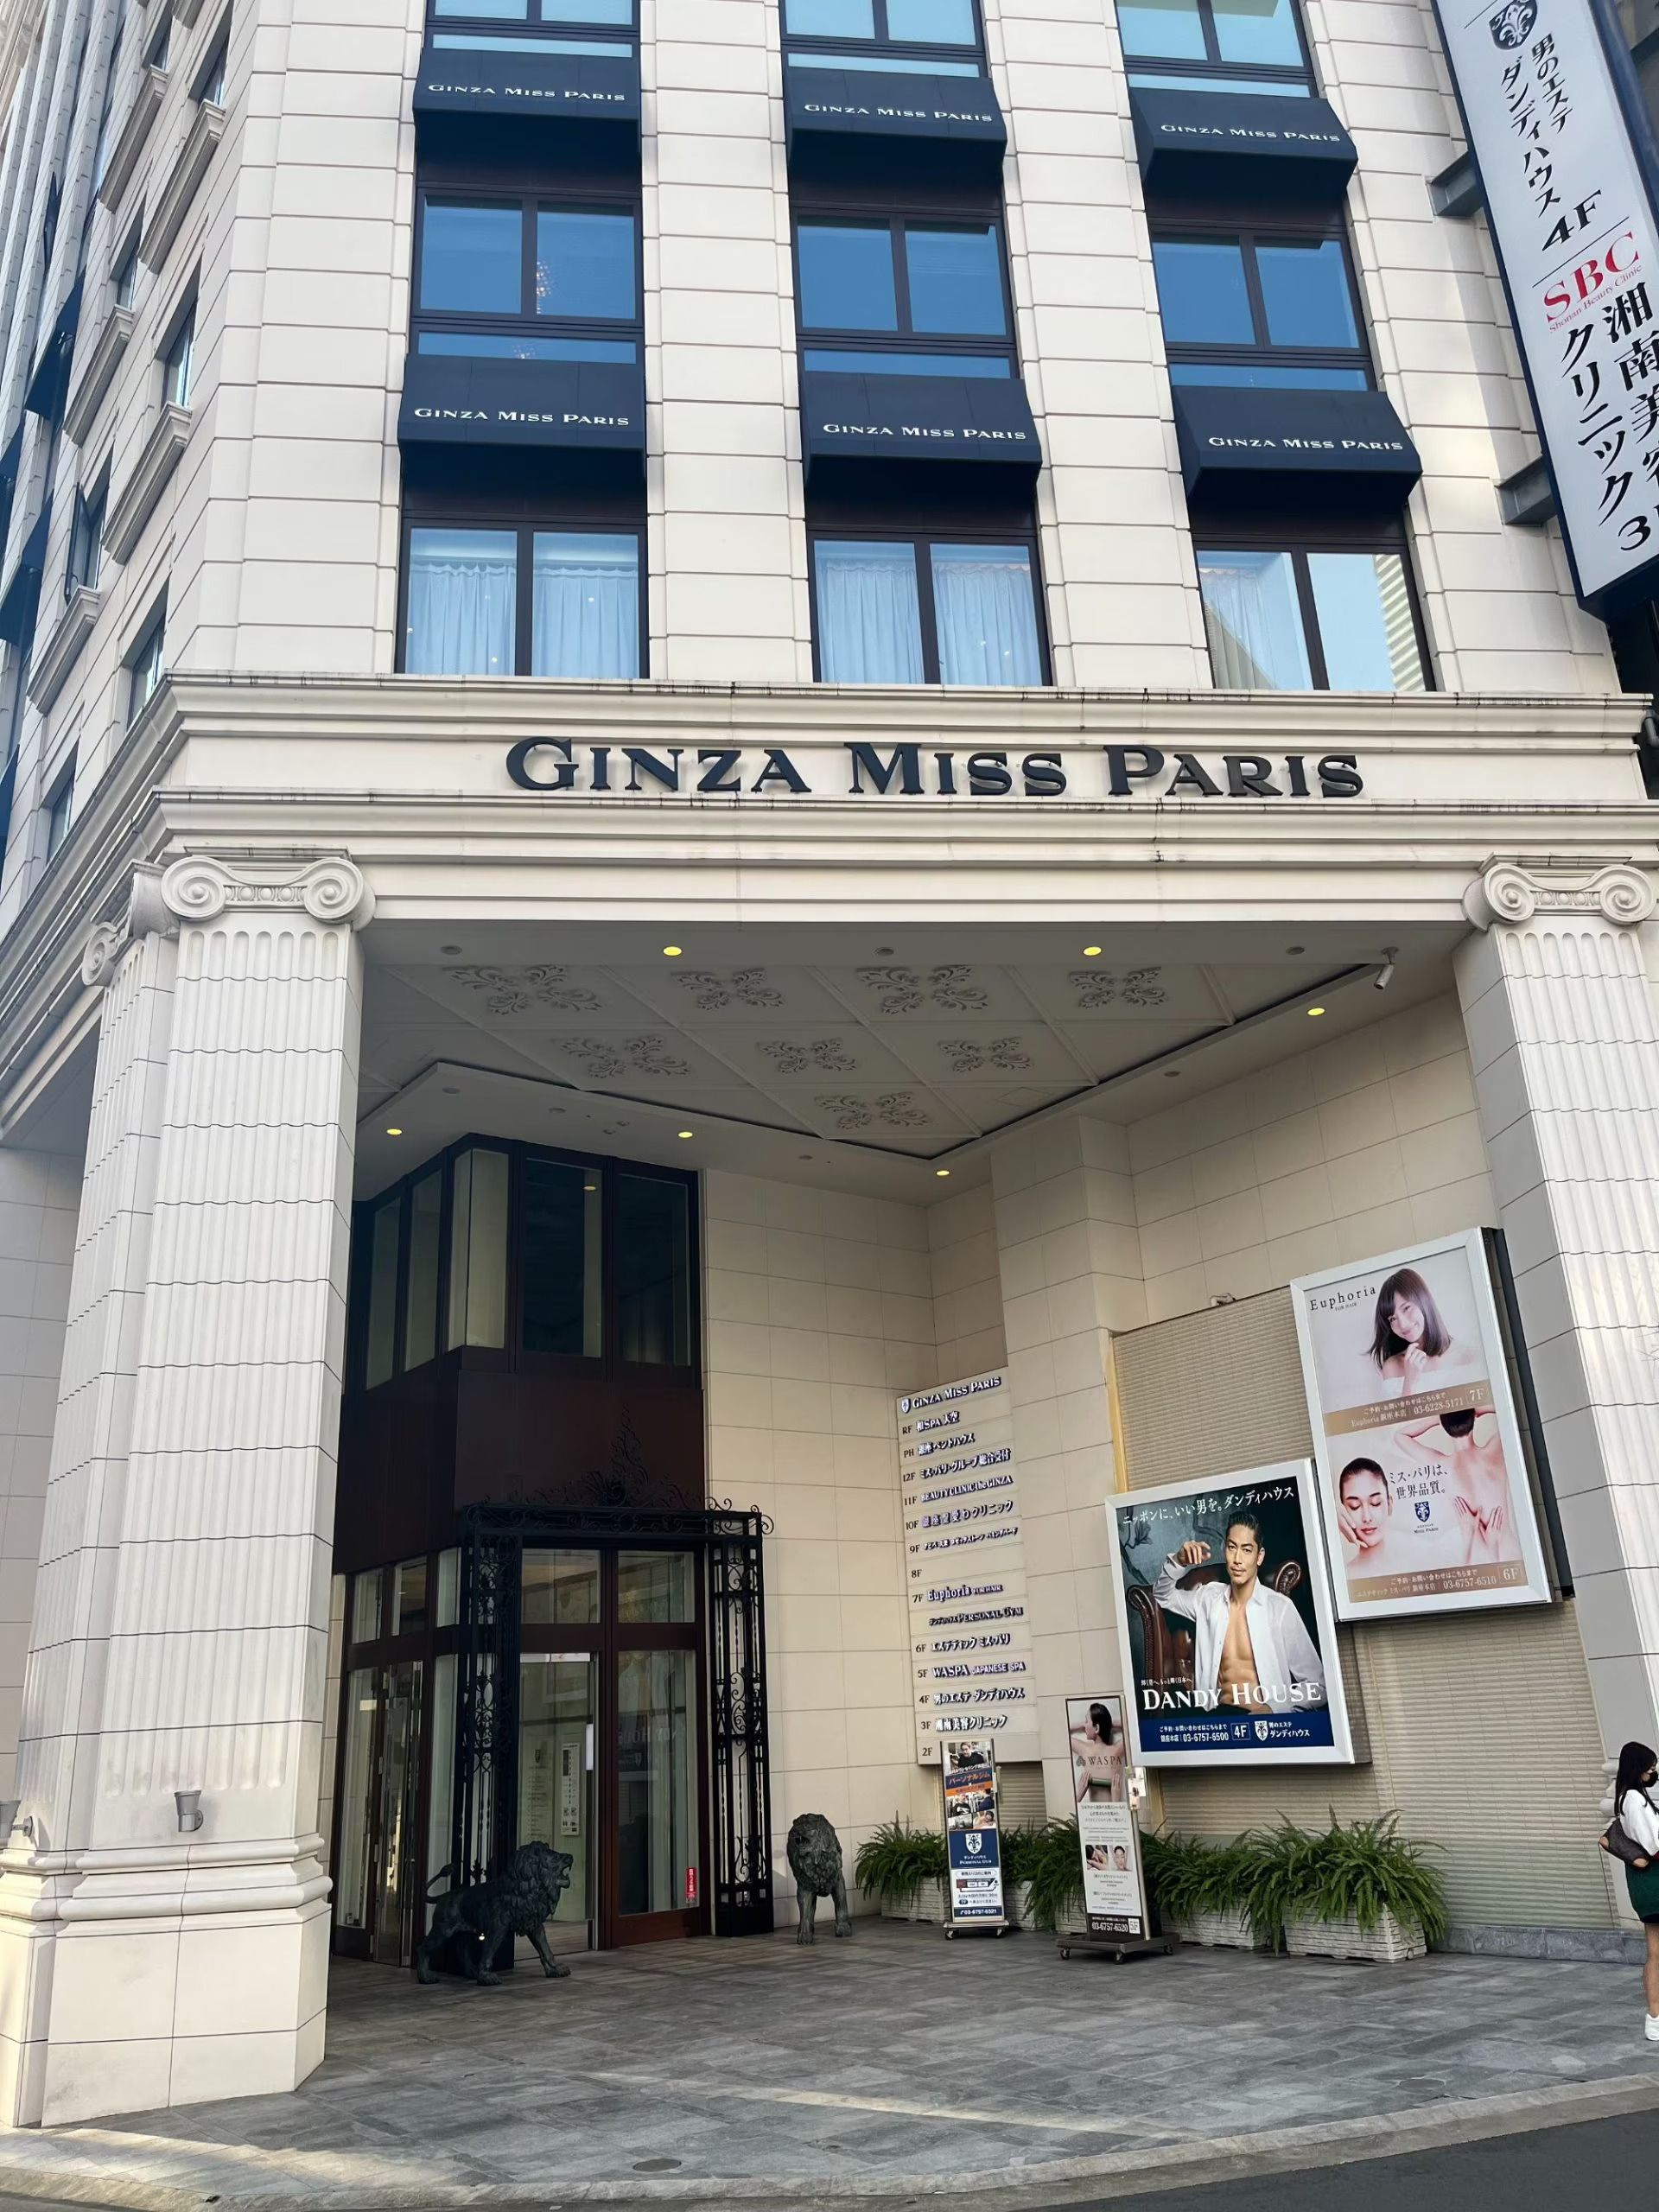 【GINZA MISS PARIS】のビル